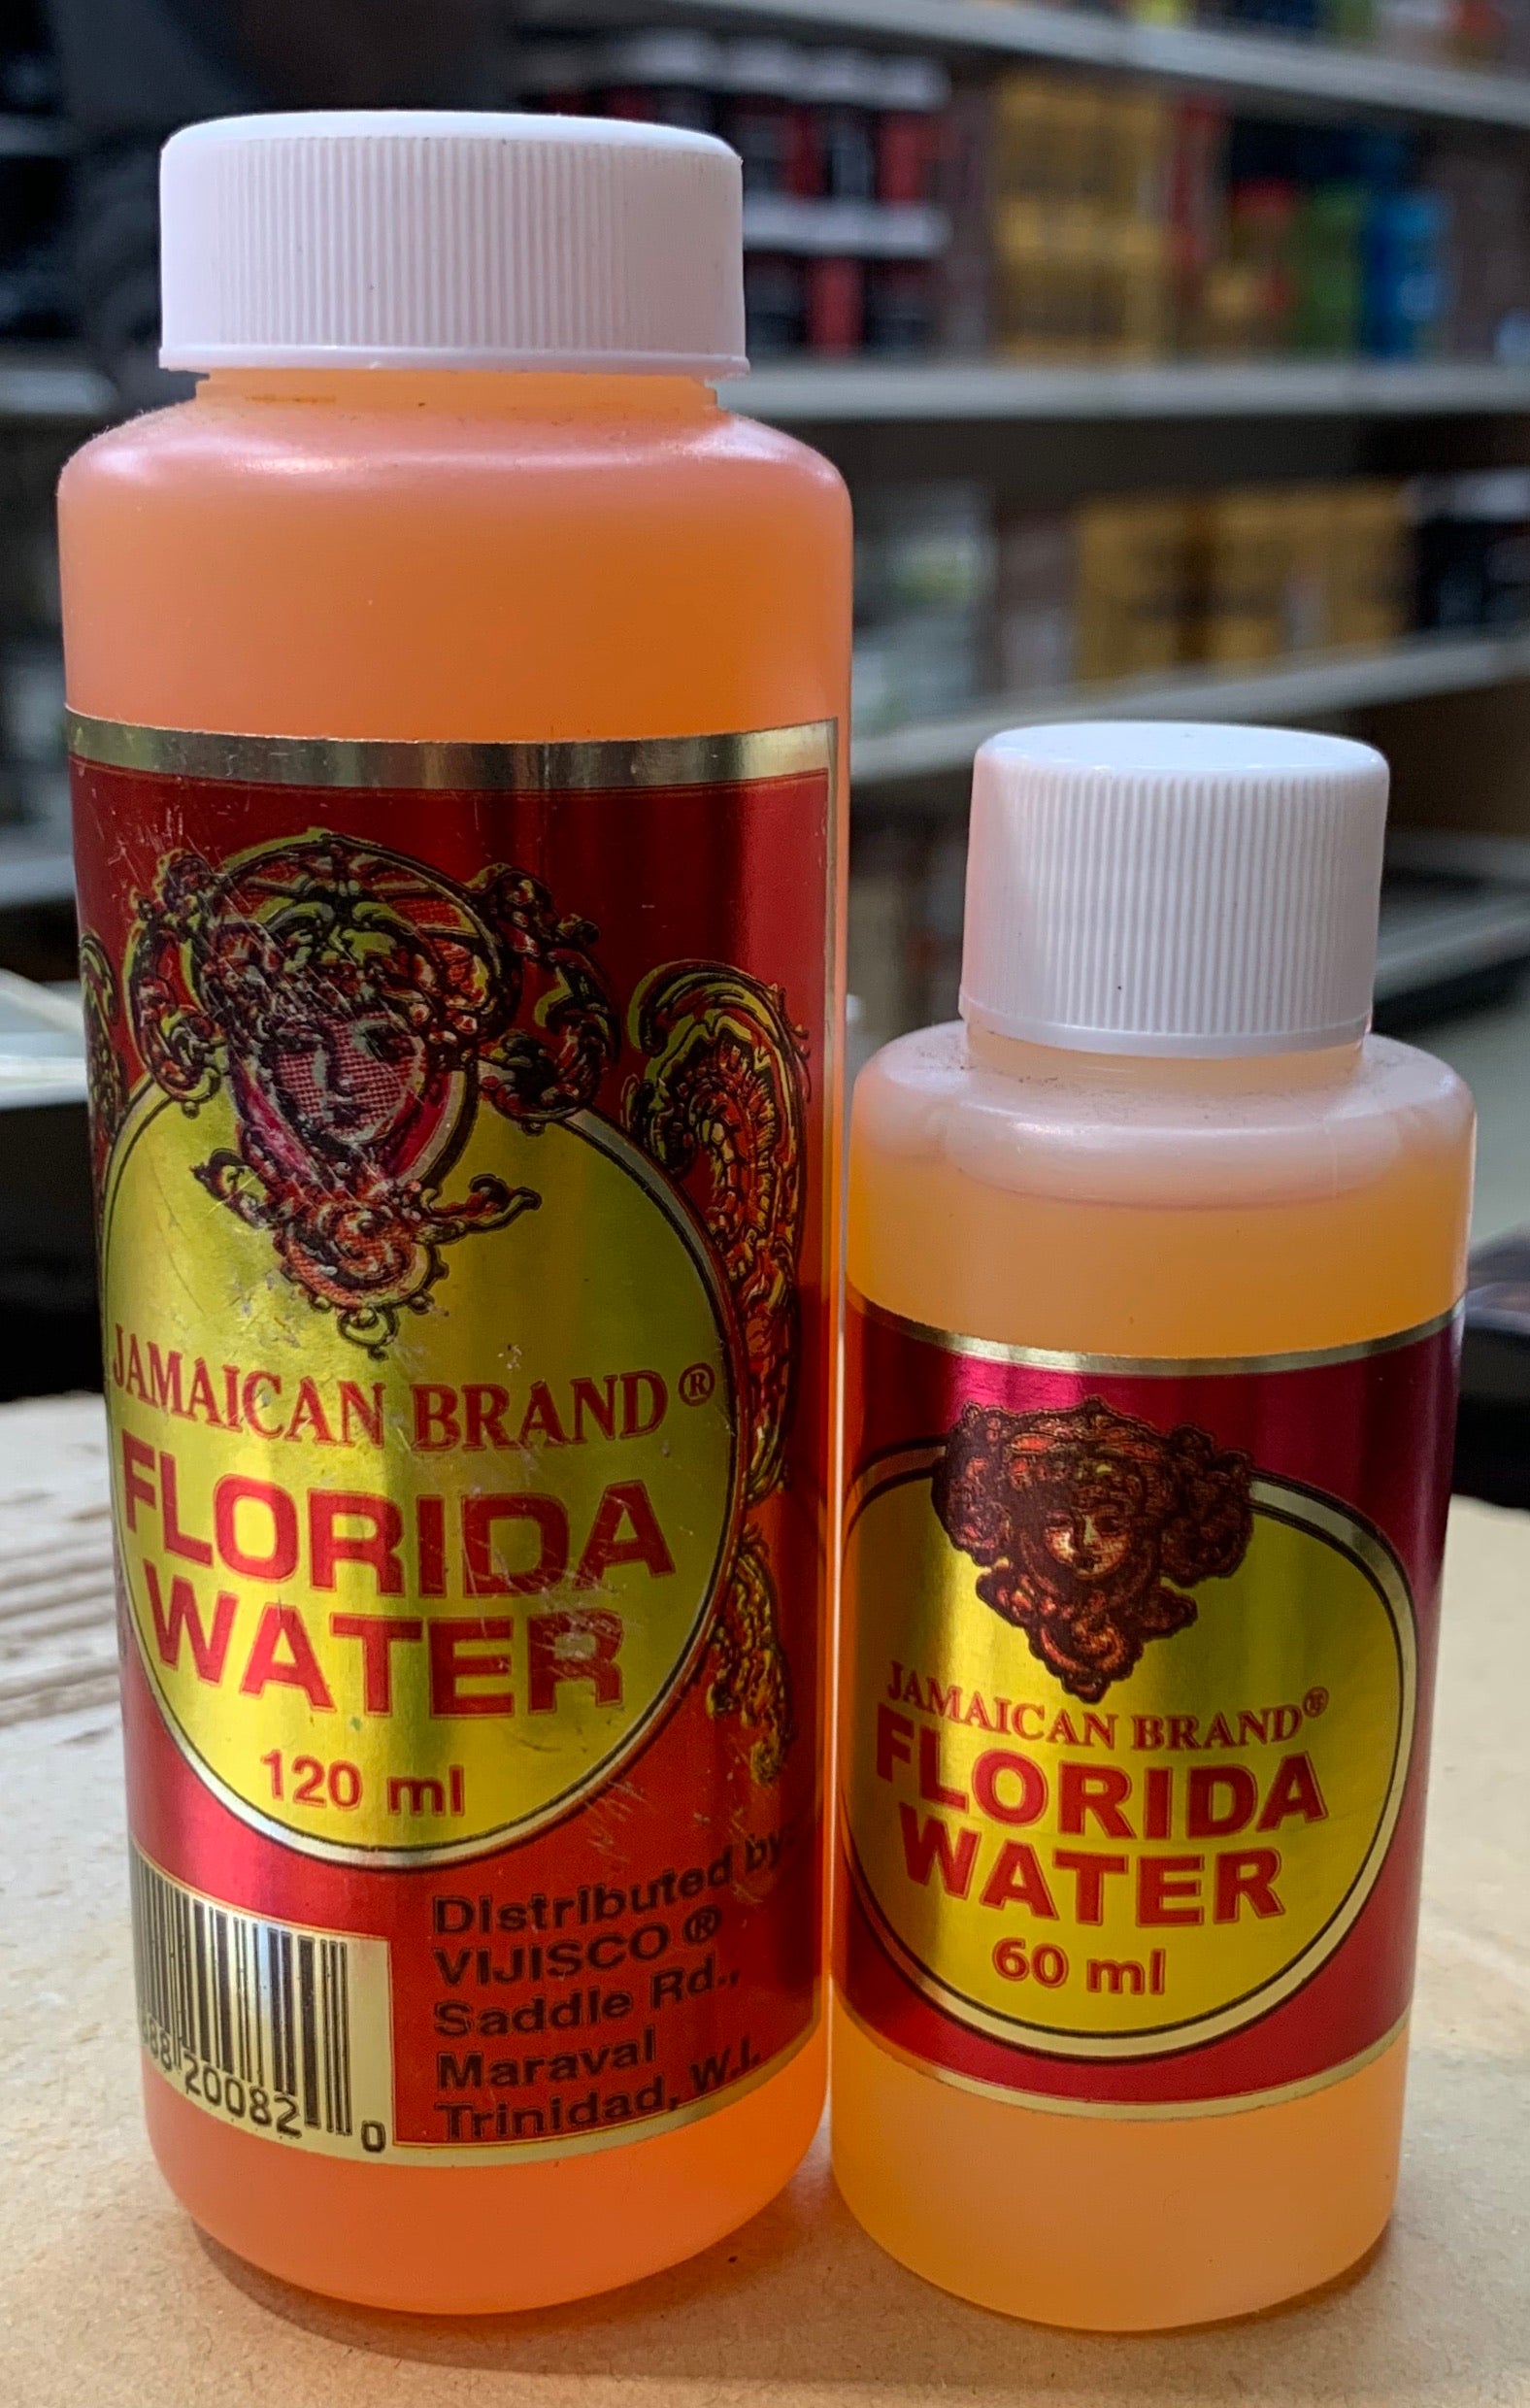 Jamaican brand Florida water 60/120ml